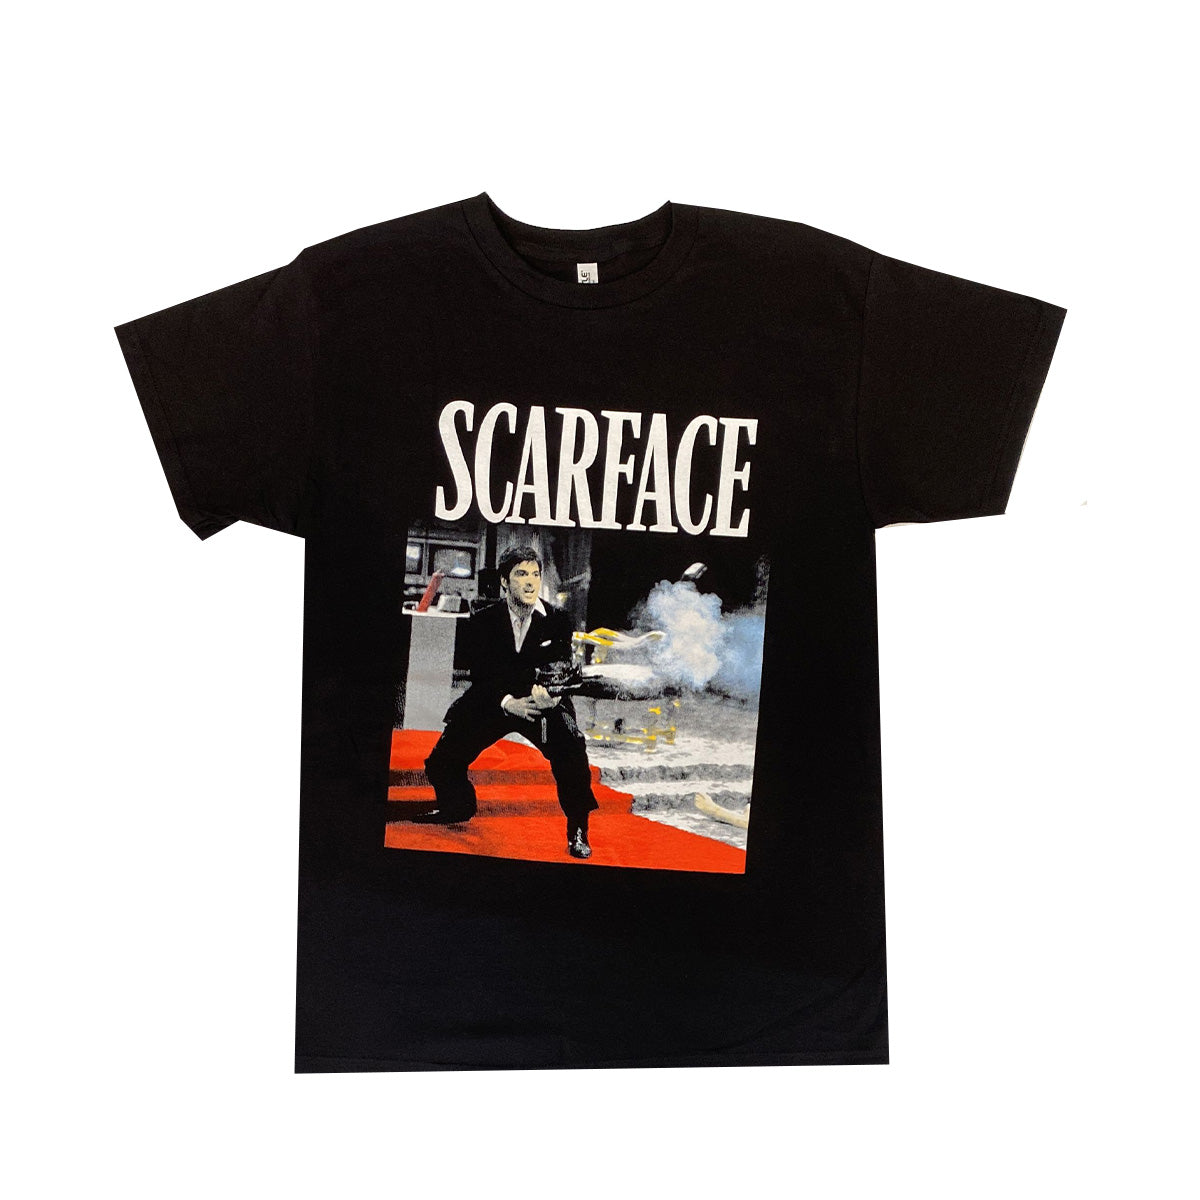 Scarface 100% Cotton T-Shirt, Pack of 5 Units, M, L, XL, XXL, XXXL